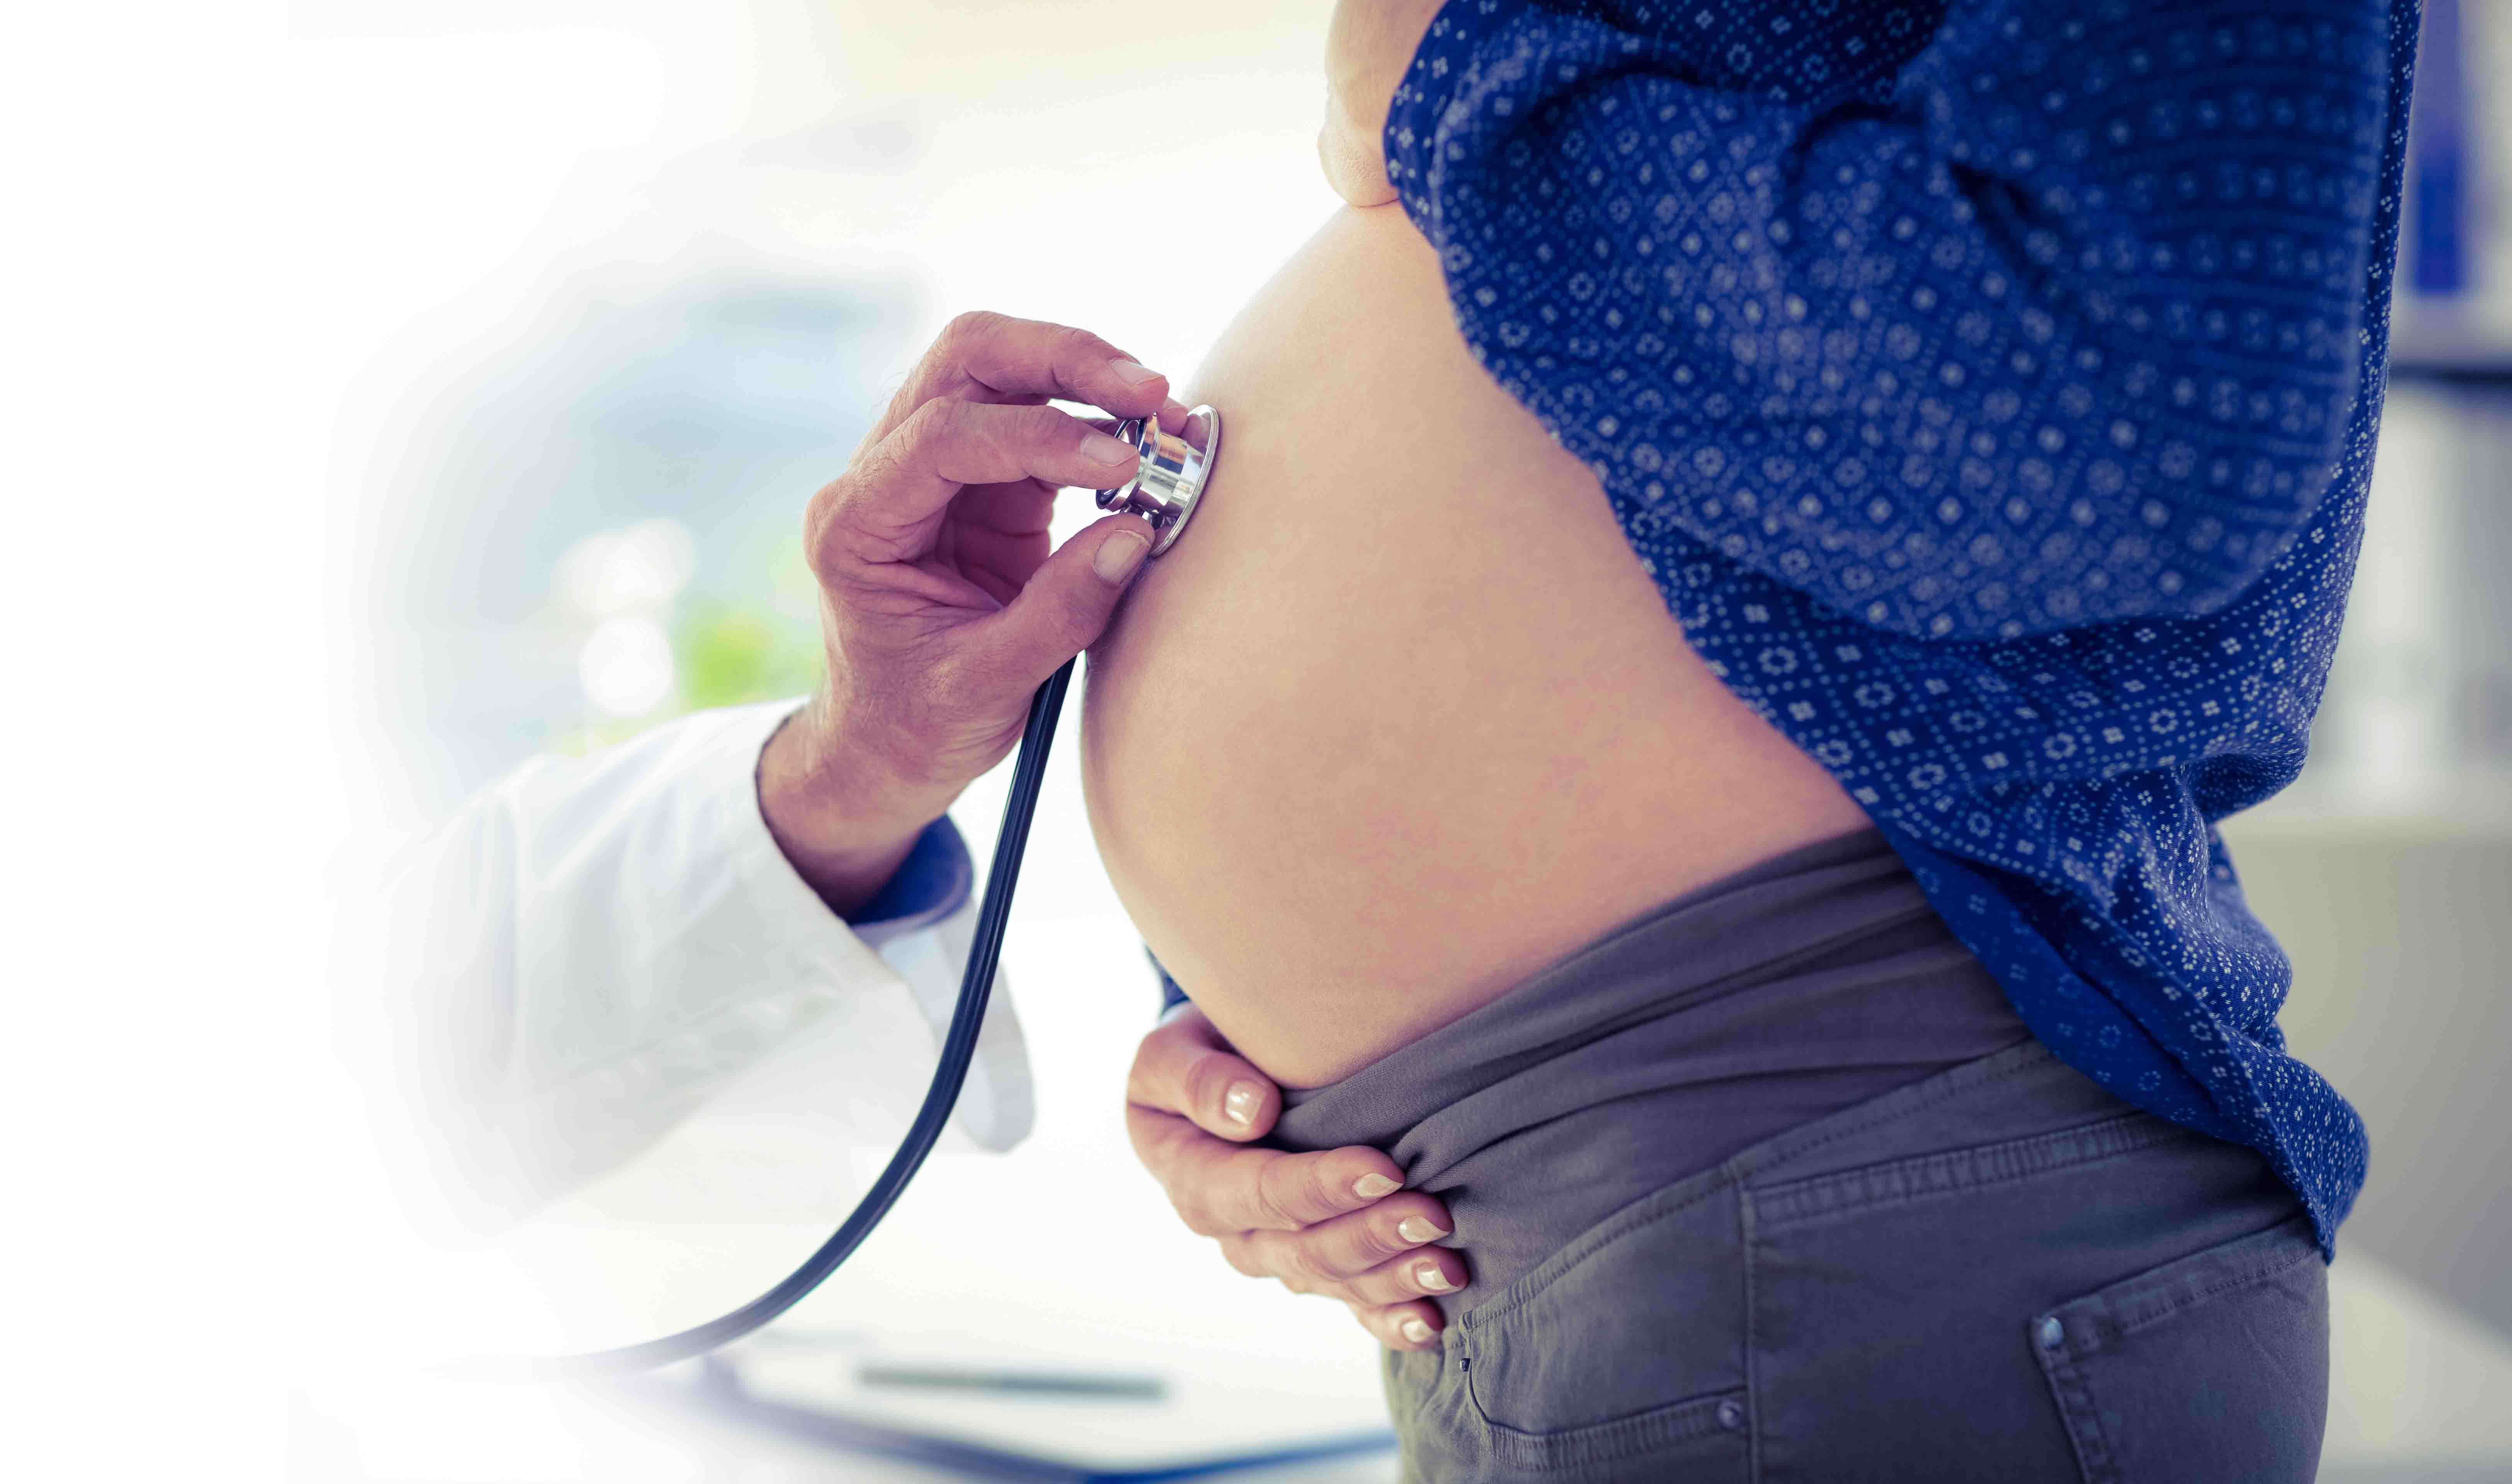 Fetal heartbeat check on a pregnant woman